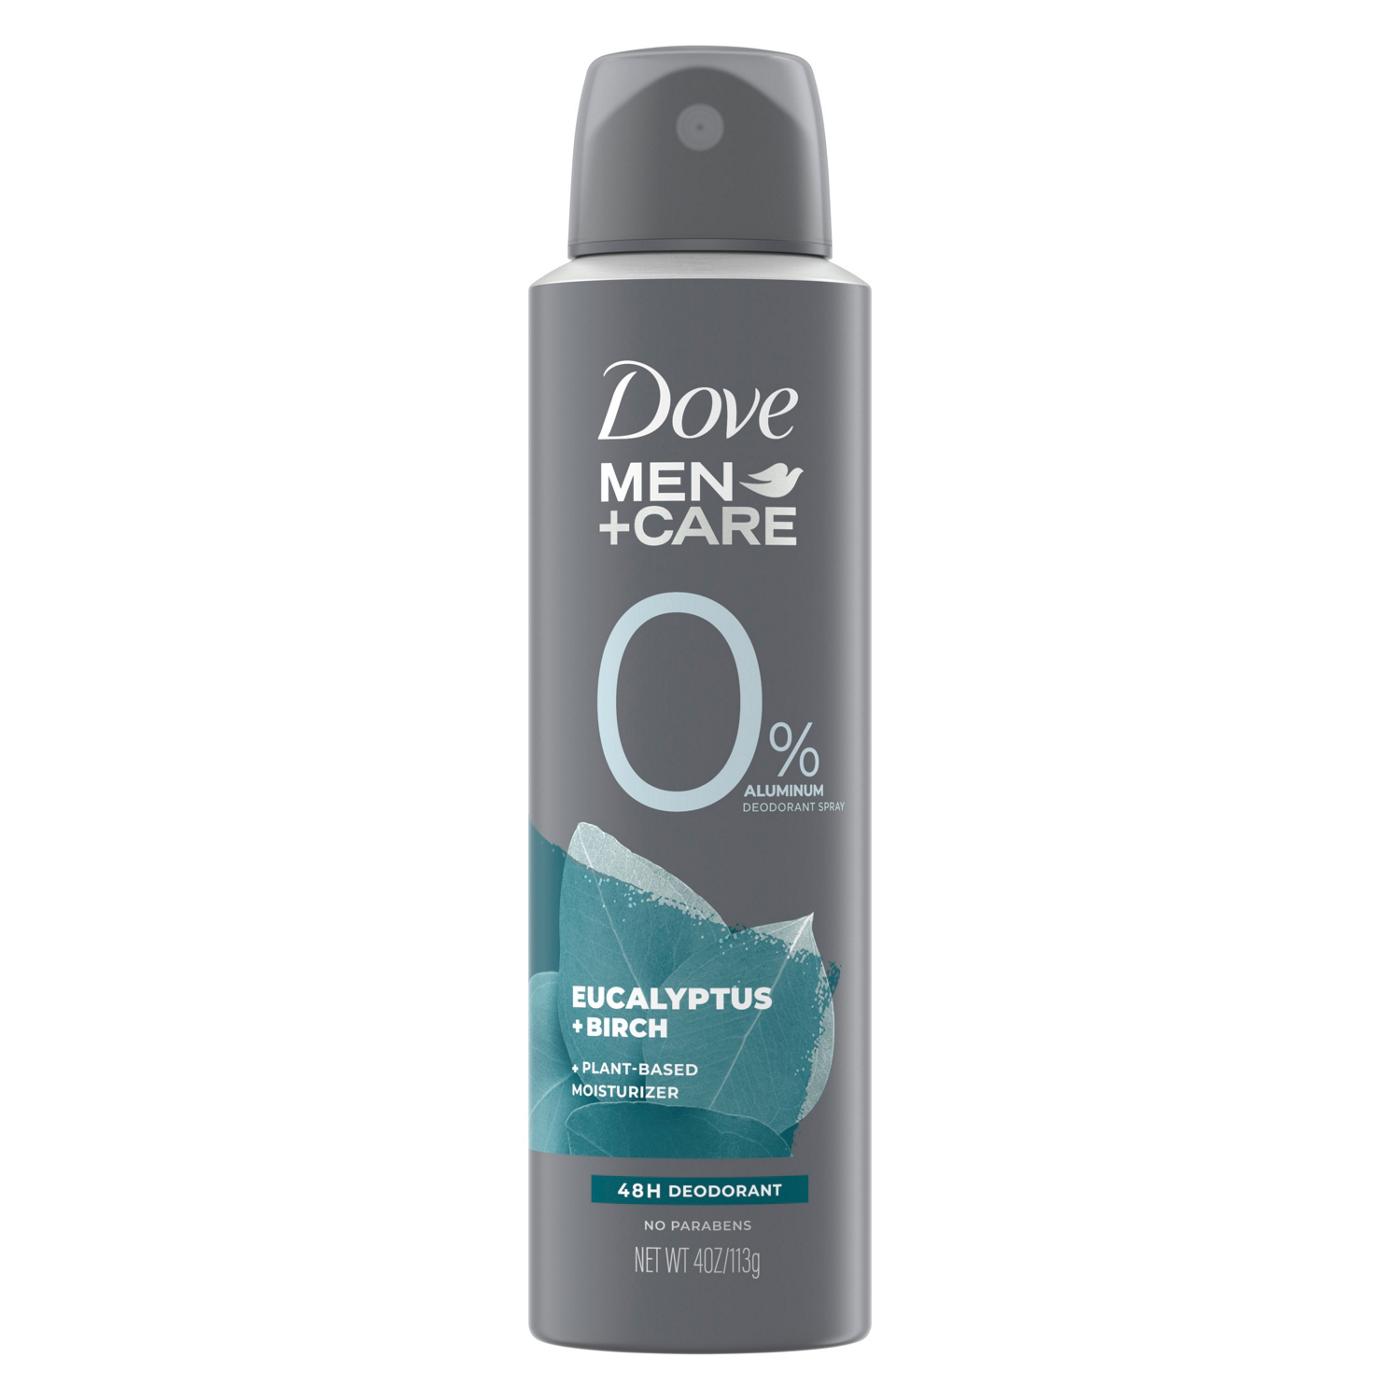 Dove Men+Care Eucalyptus Birch Deodorant Spray; image 1 of 3